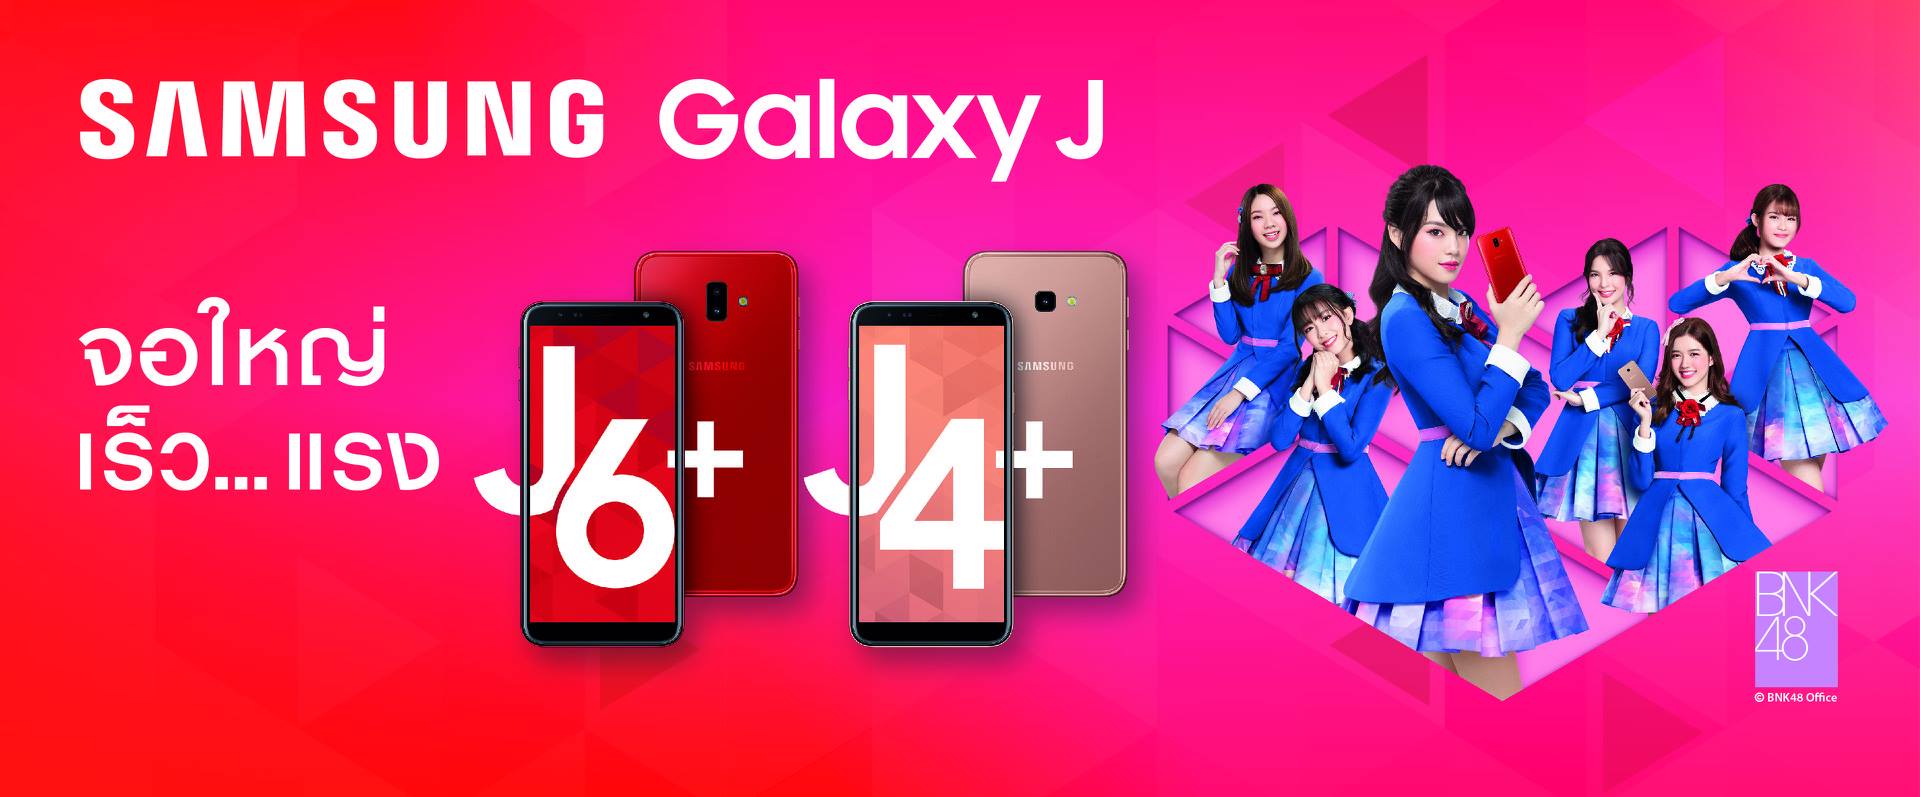 Samsung Galaxy J4+ and J6+